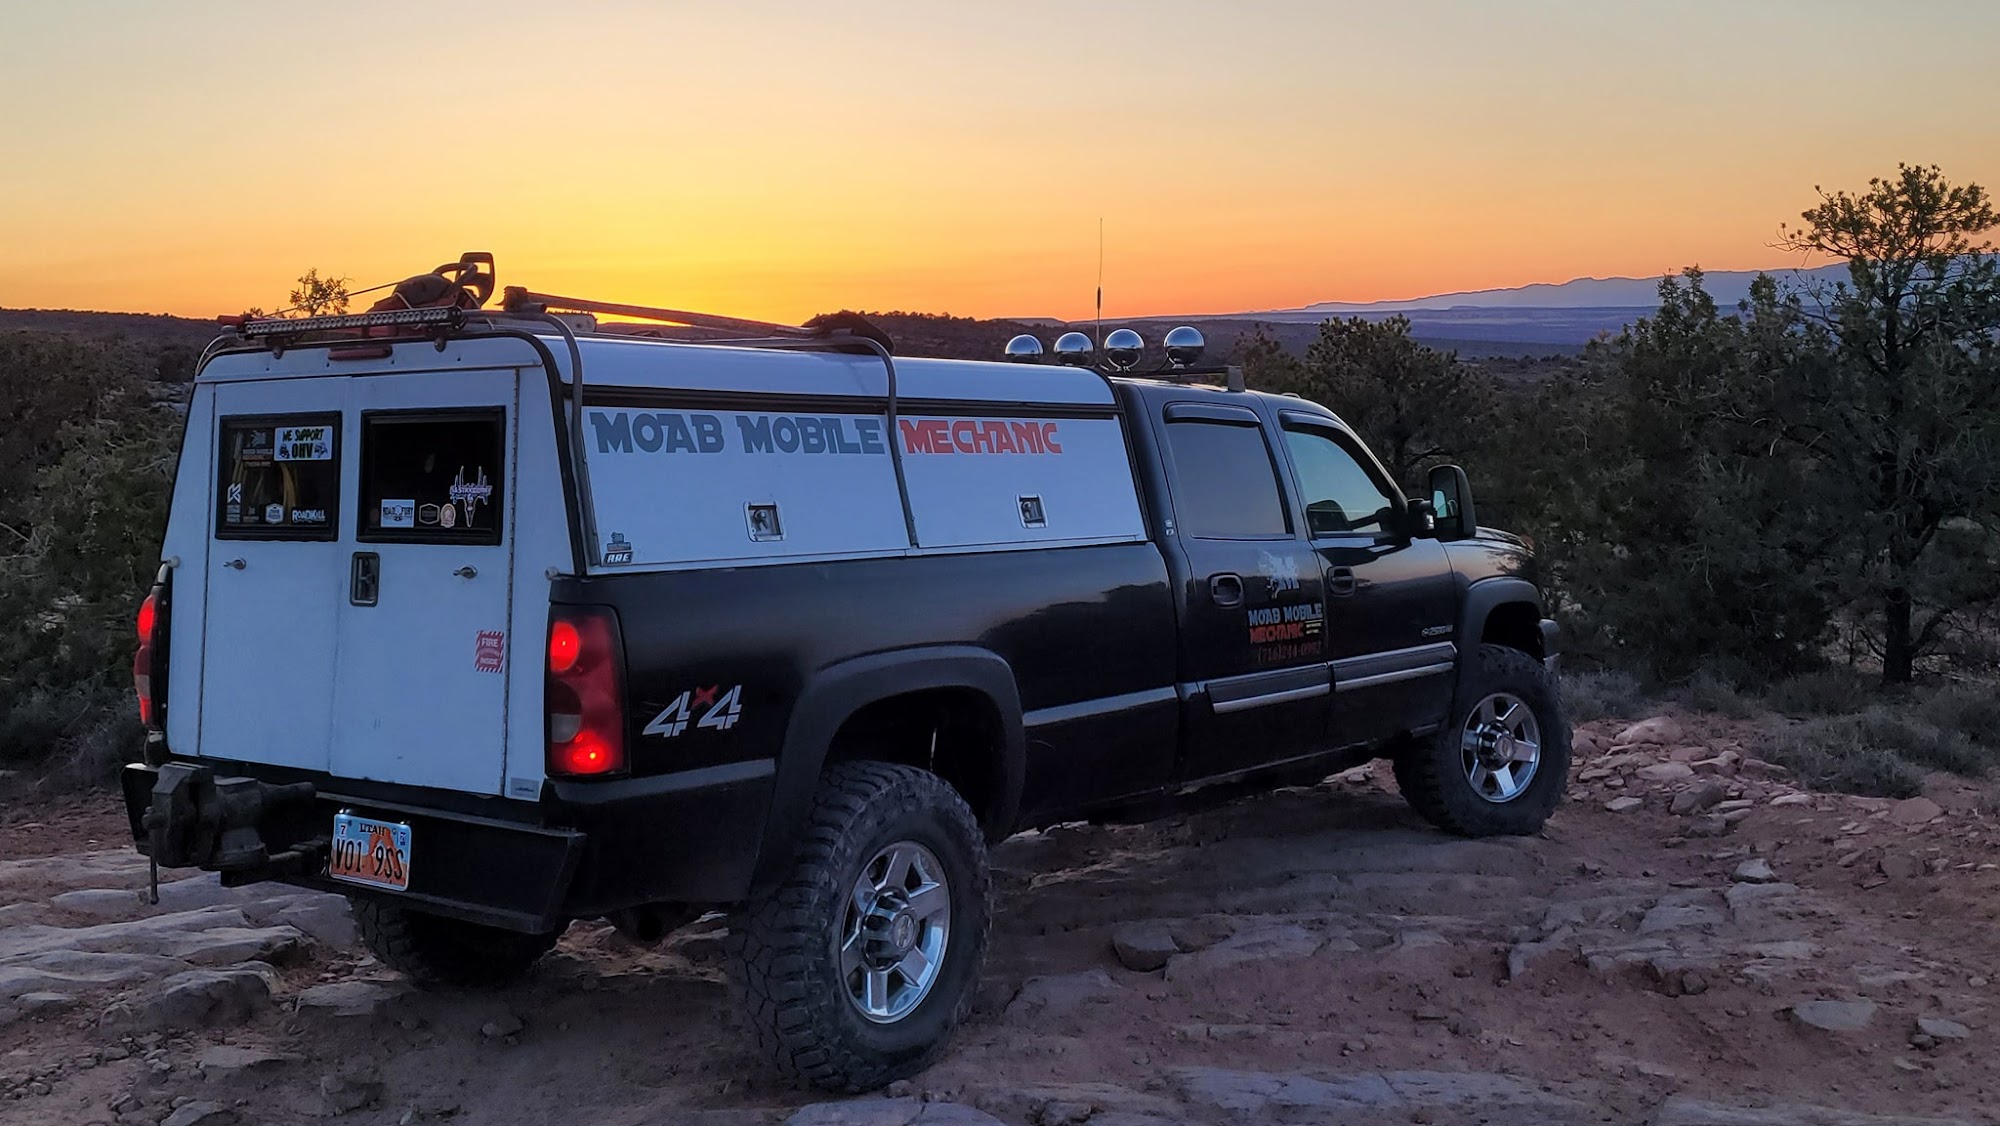 Moab Mobile Mechanic